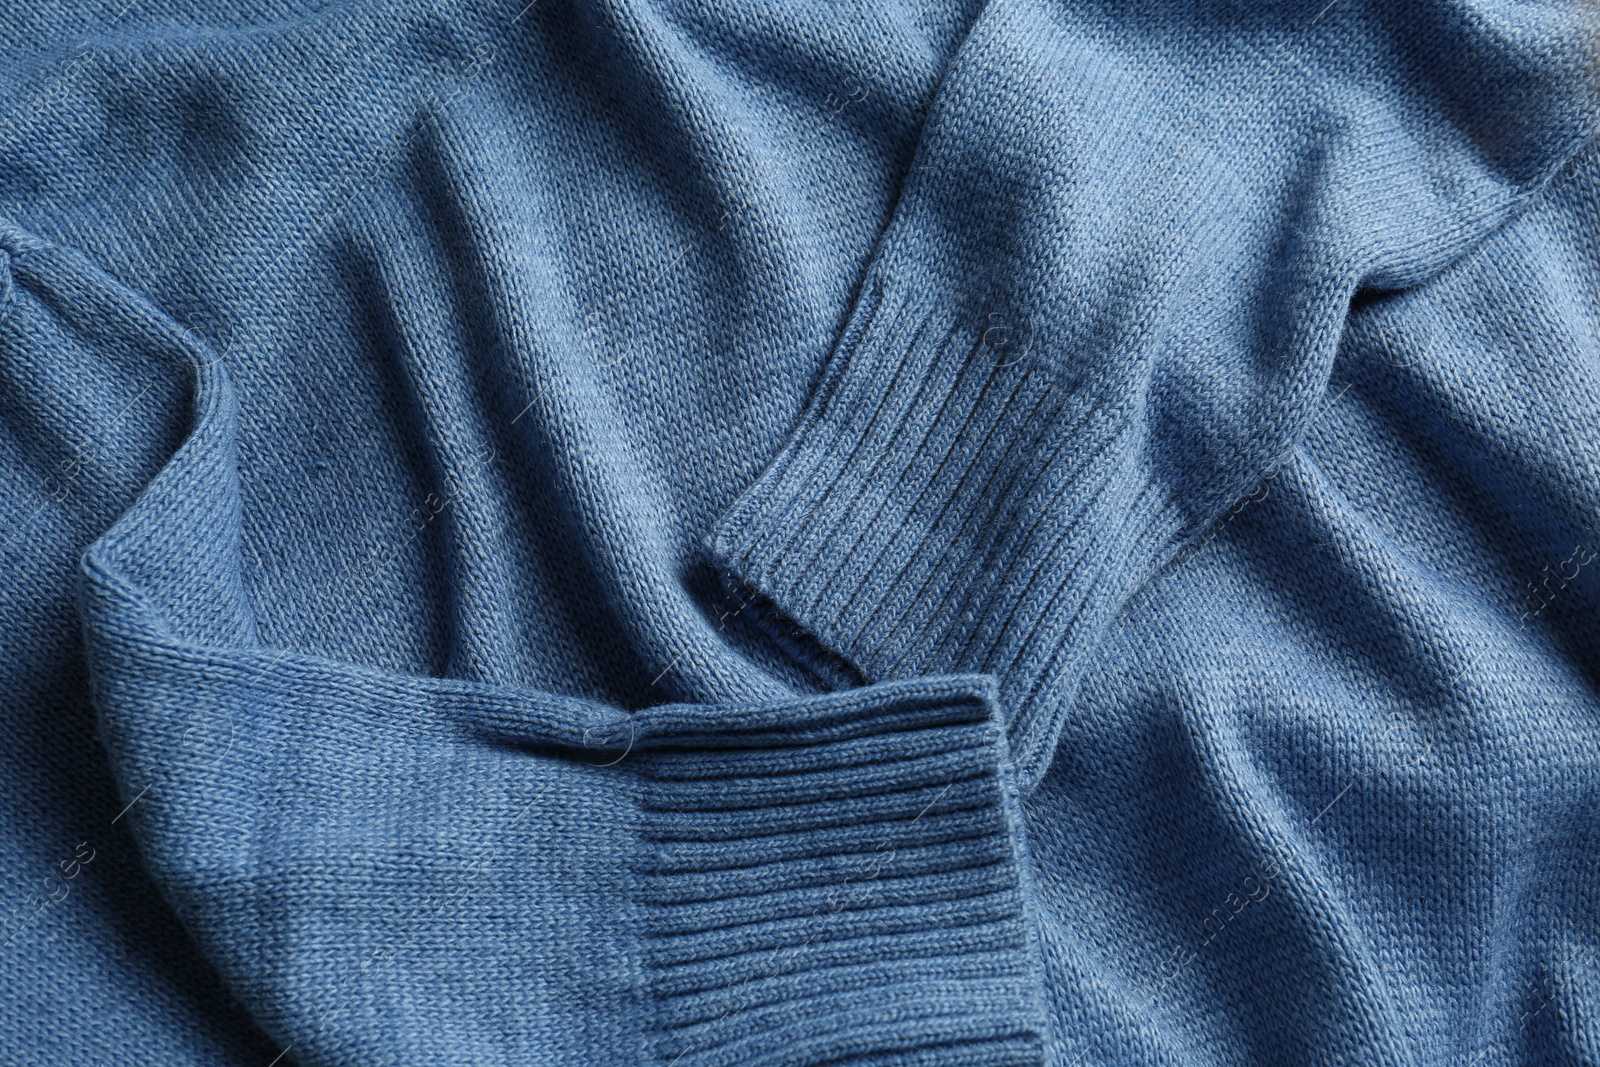 Photo of Soft stylish knitted sweater as background, closeup